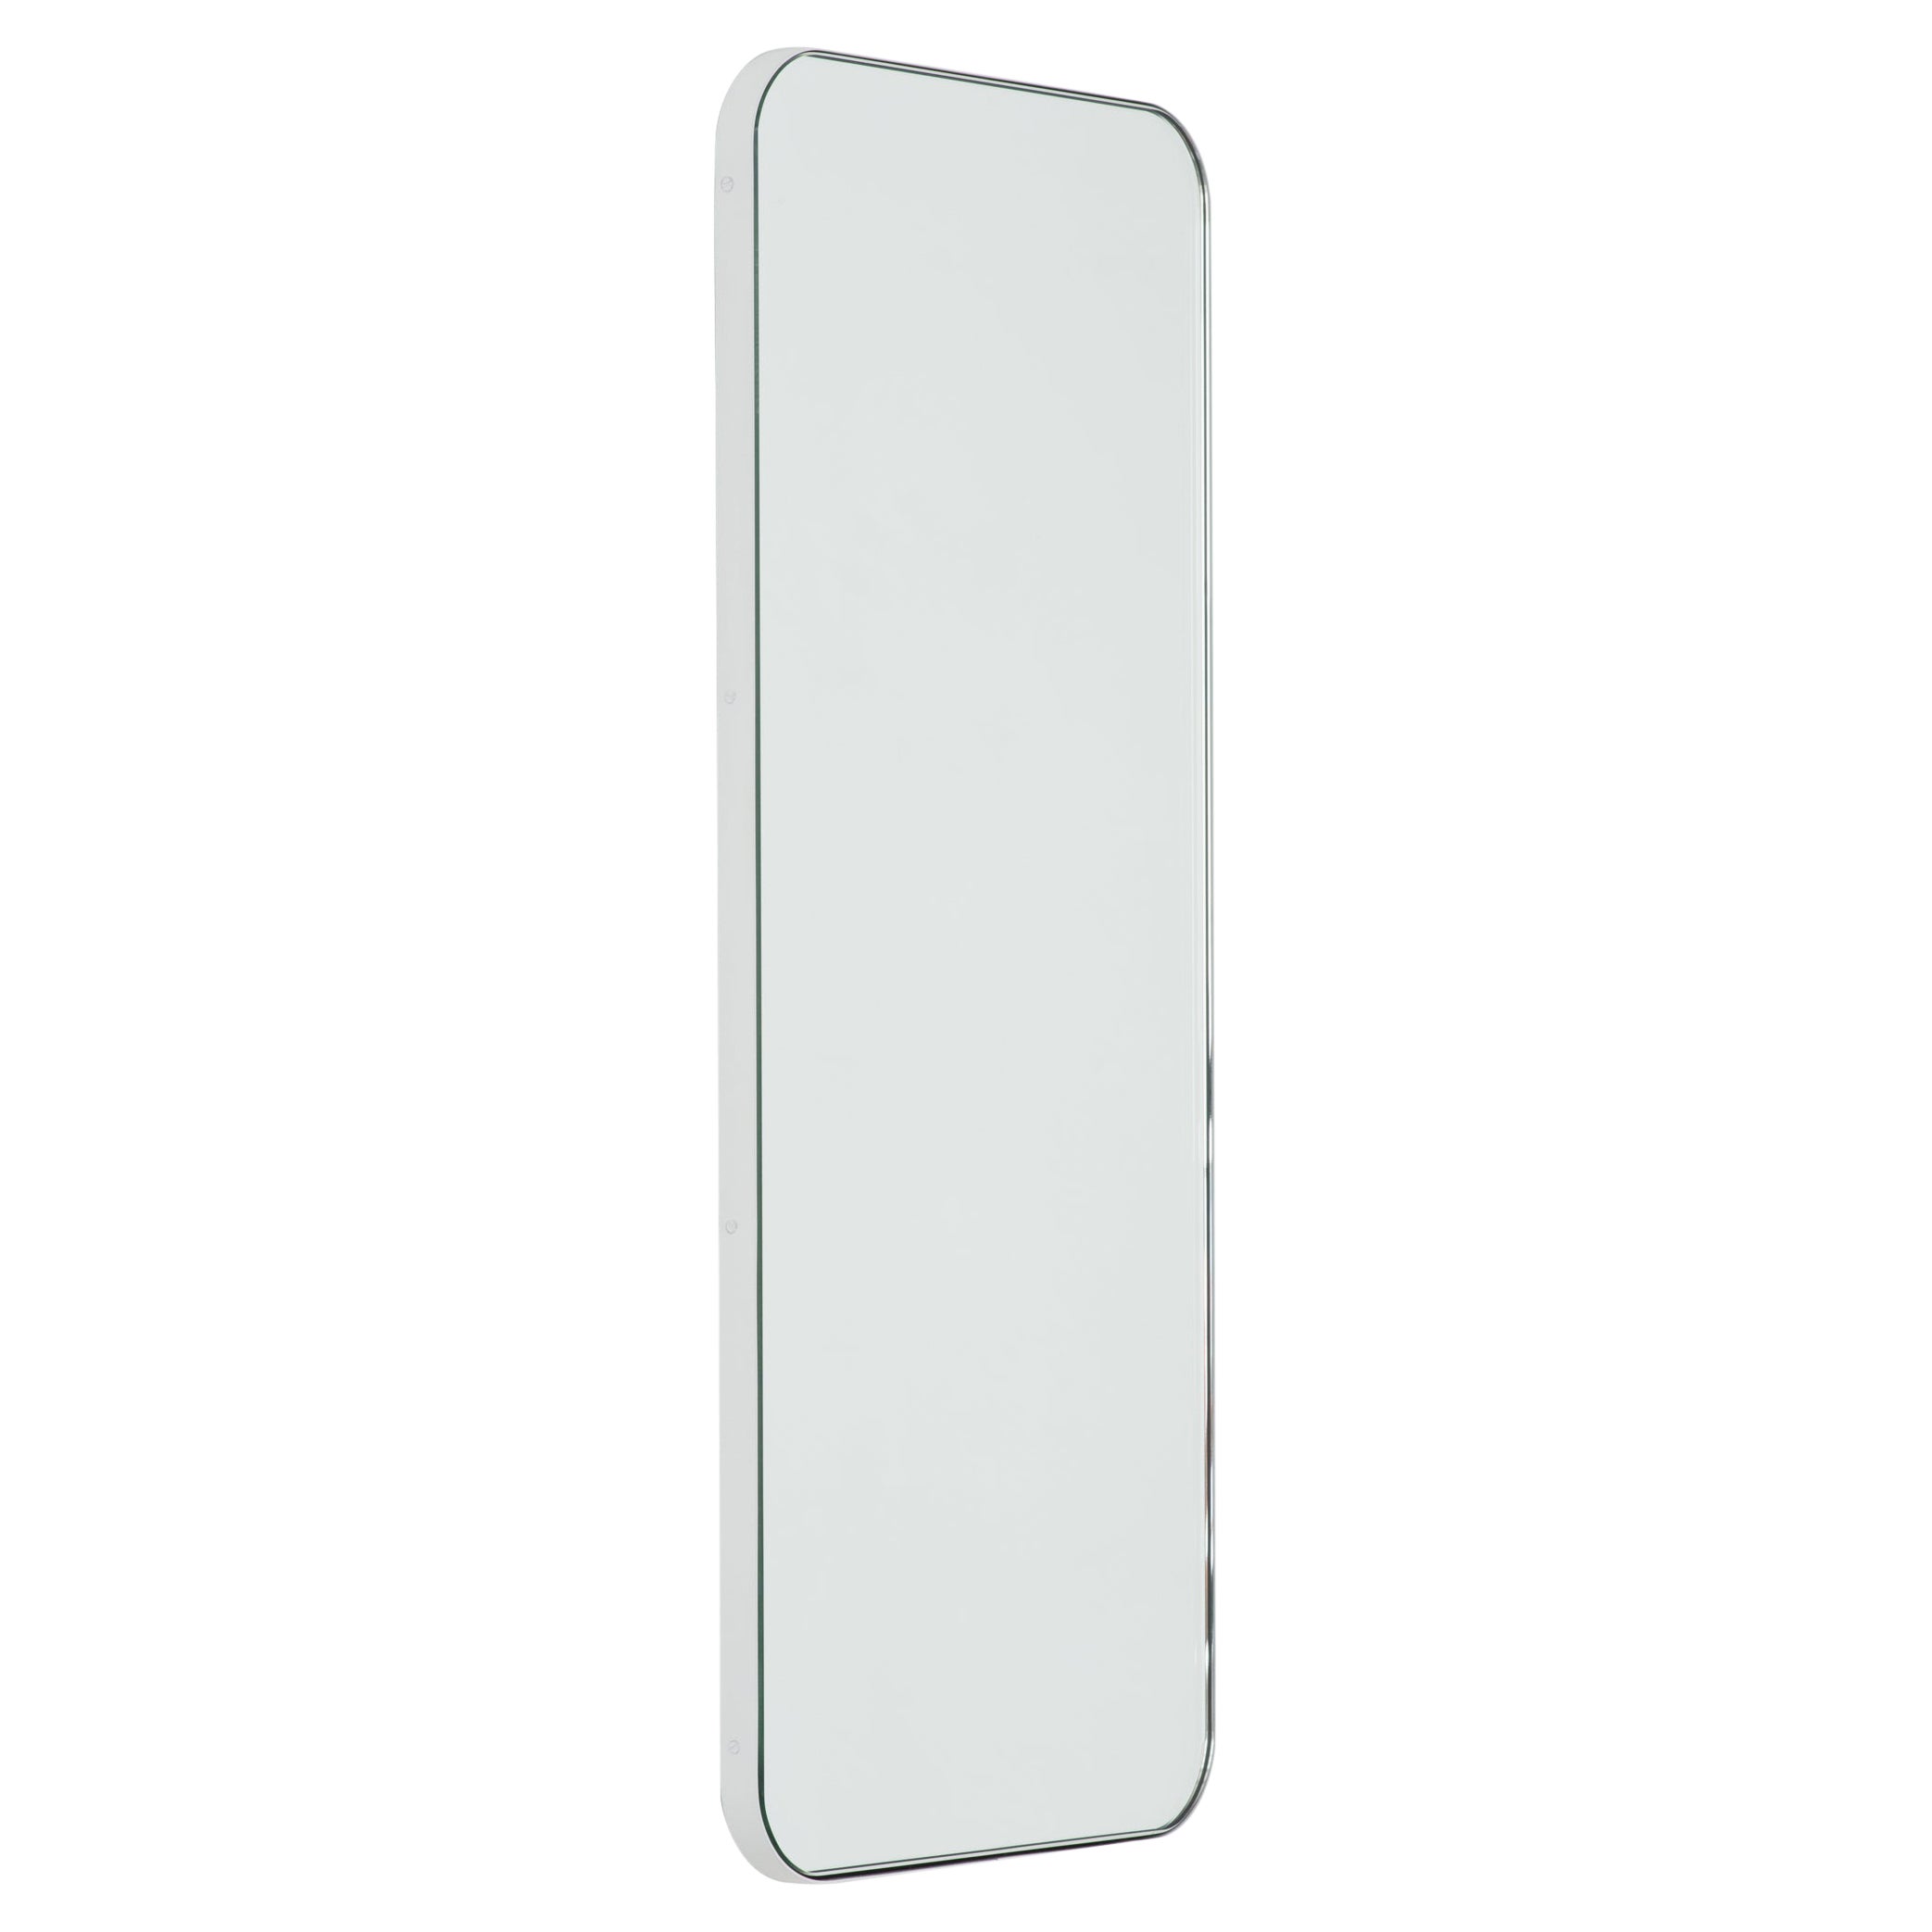 Quadris Rectangular Modern Mirror with a White Frame, Small